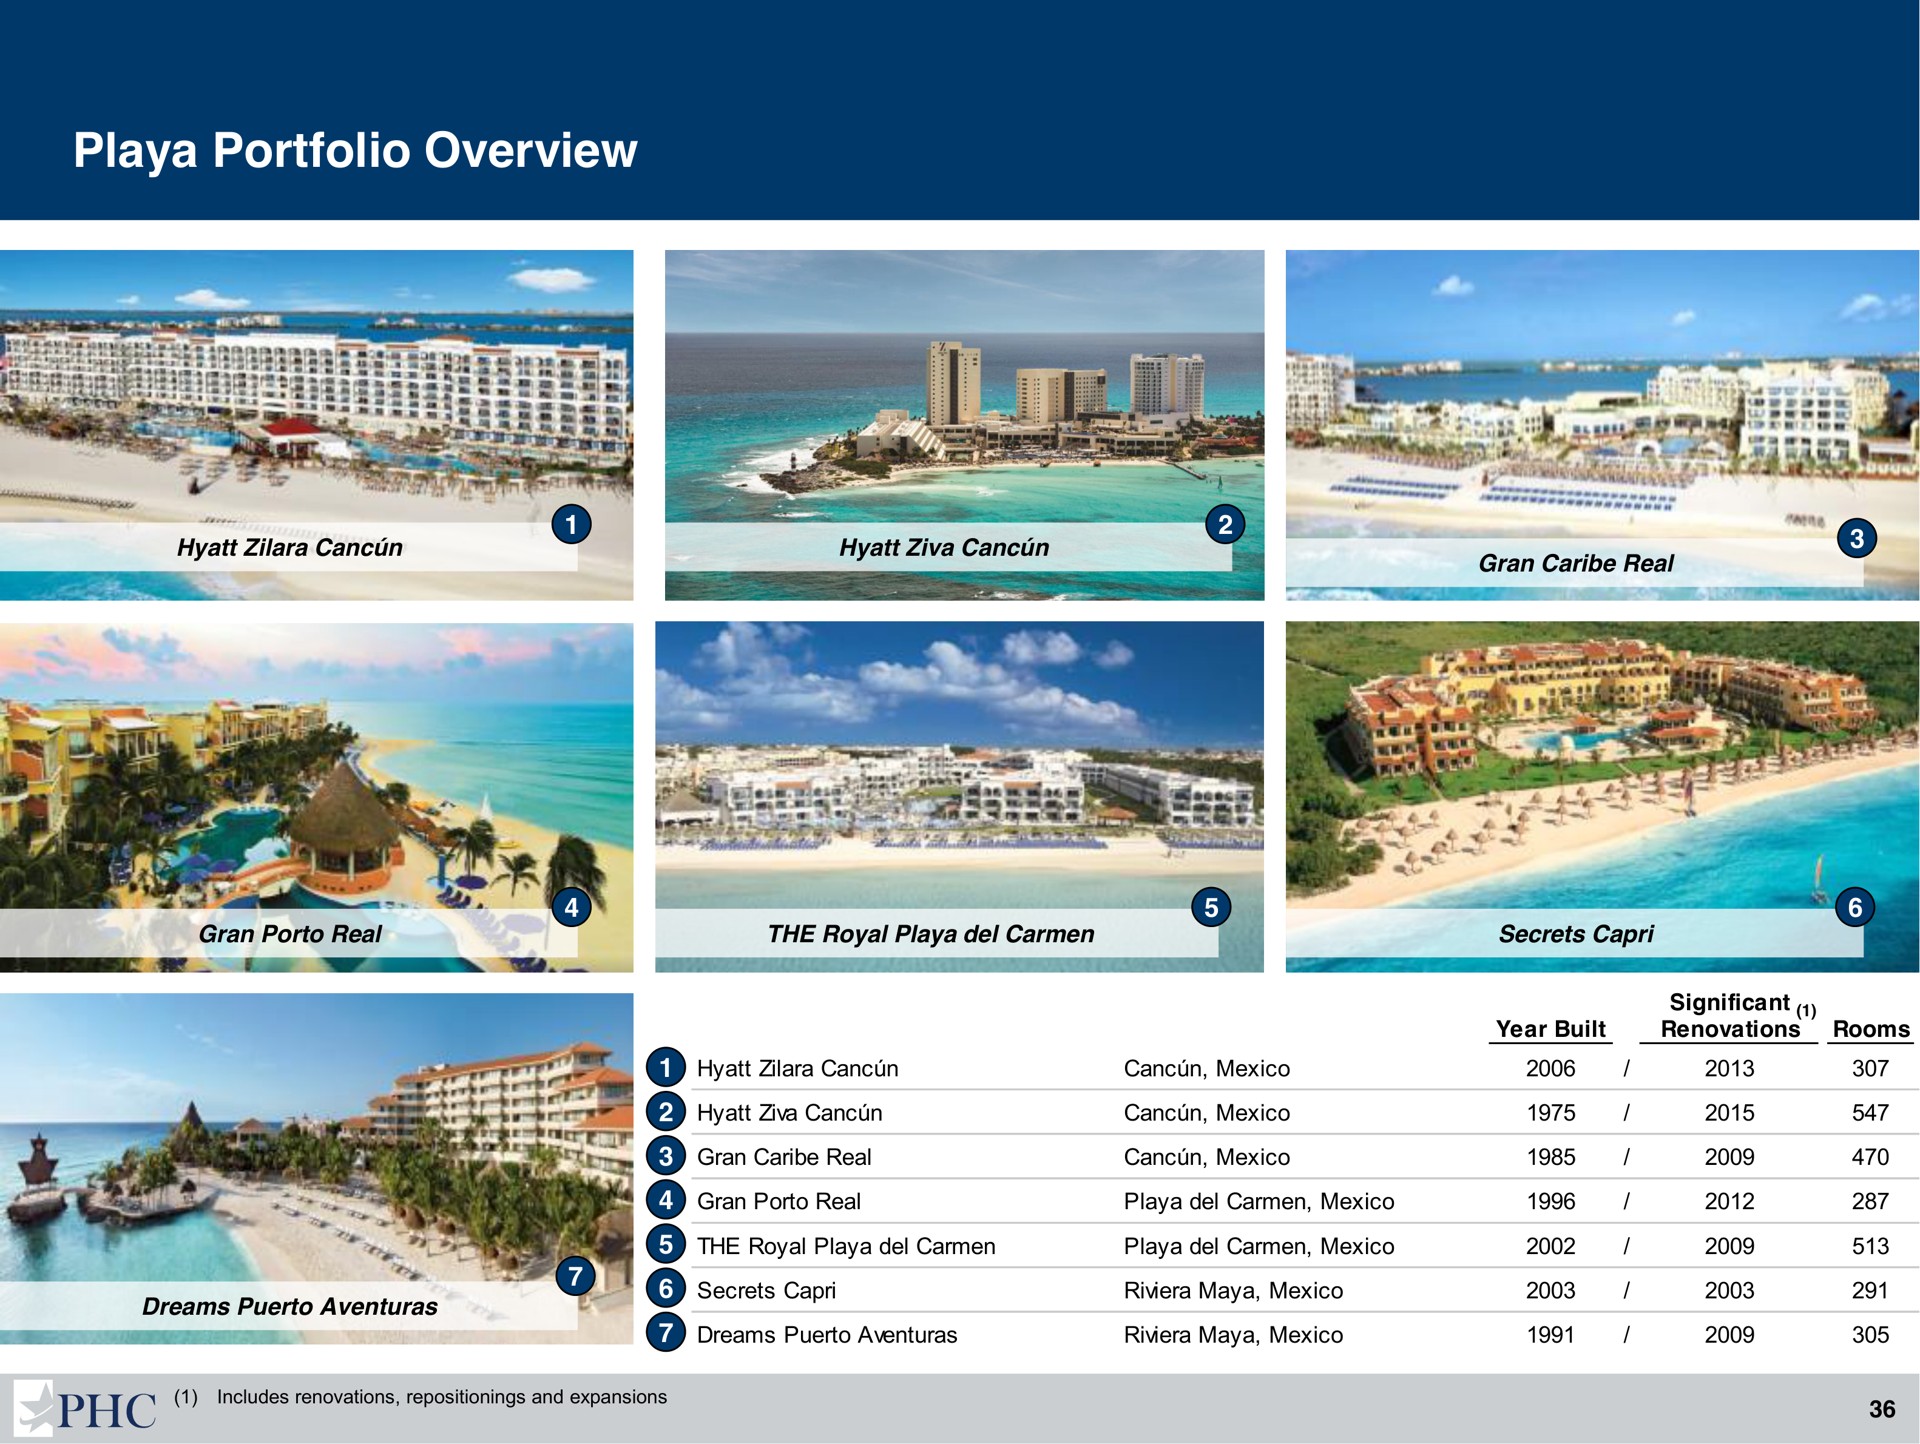 playa portfolio overview | Playa Hotels